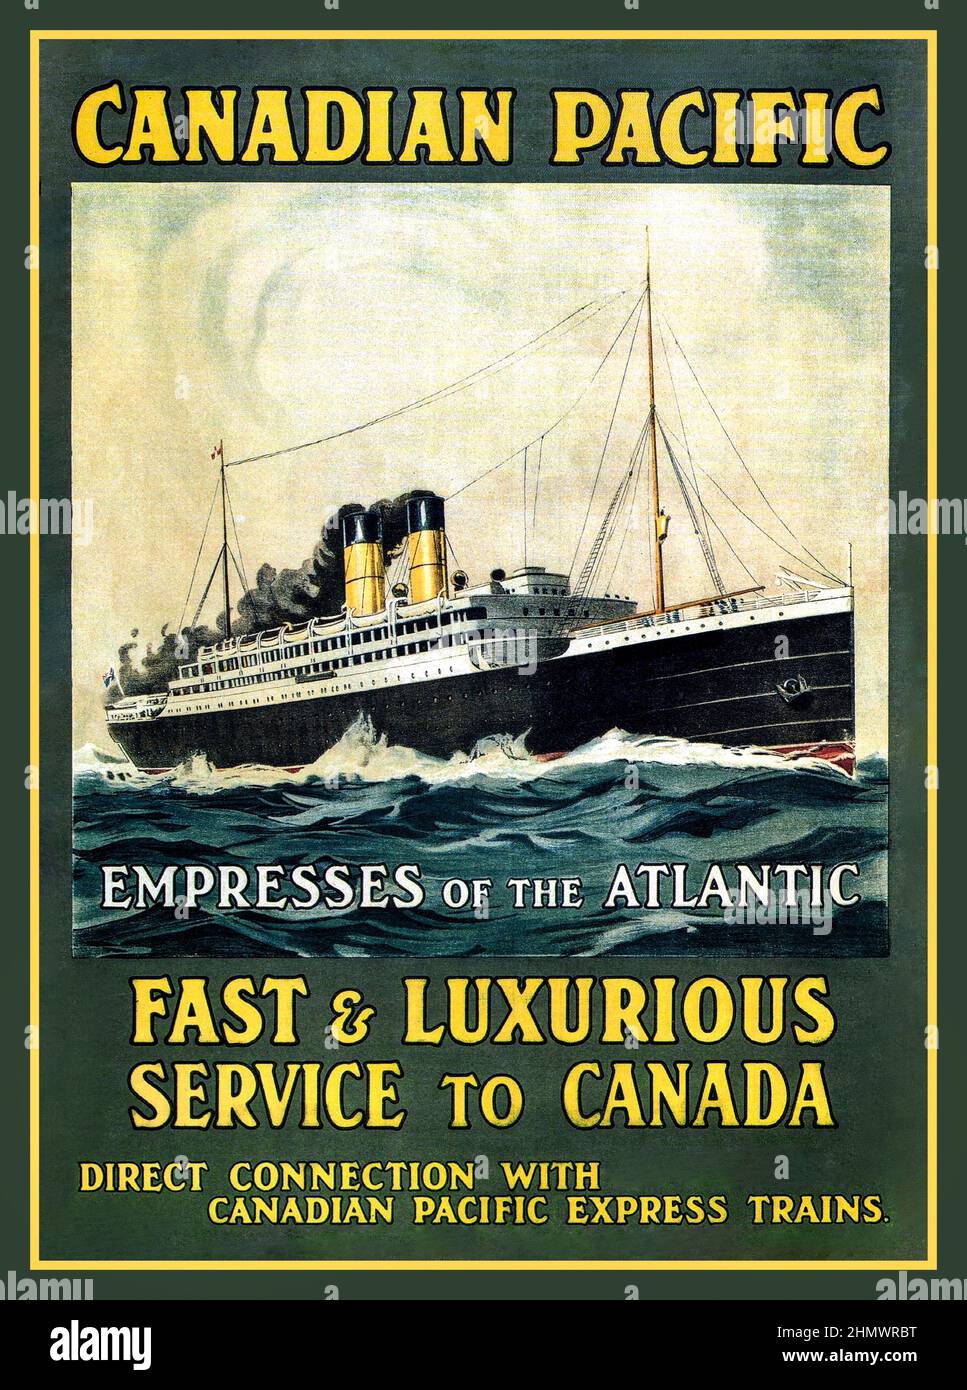 CANADIAN PACIFIC 1910 Ocean Liner Poster Canadian Pacific. Kaiserinnen des Atlantiks. Schneller & luxuriöser Service nach Kanada „direkte Verbindung mit Canandian Pacific Express Zügen“ Stockfoto